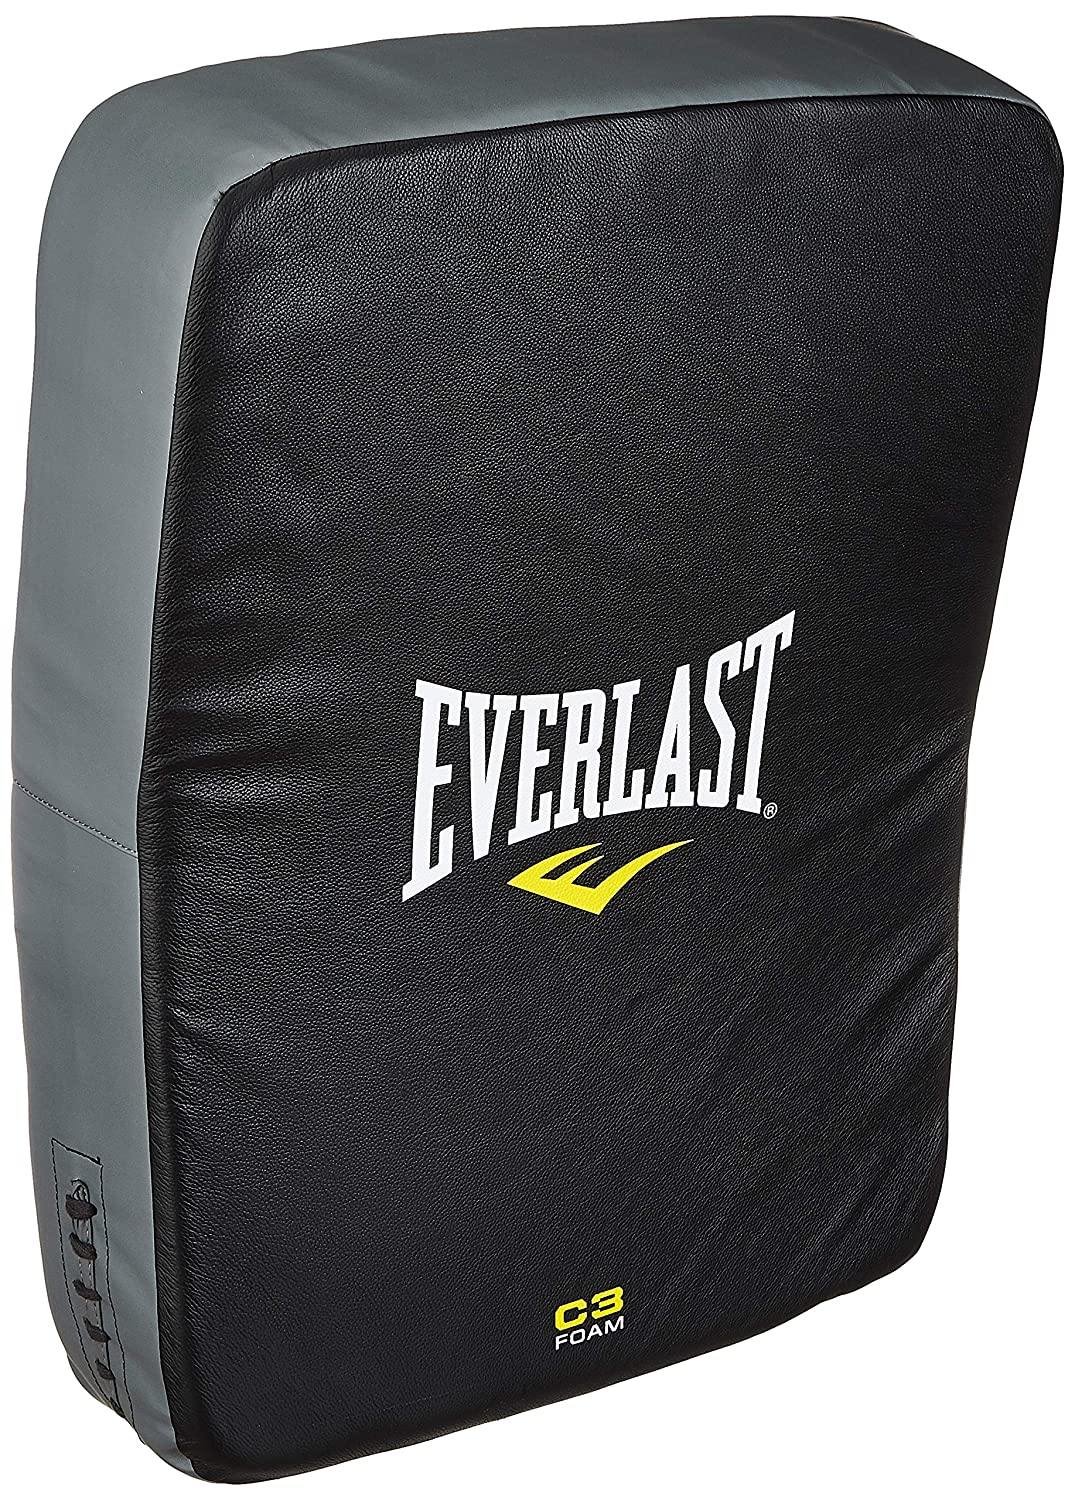 Everlast Boxing Pro Kick Shield Black/Grey - Best Price online Prokicksports.com